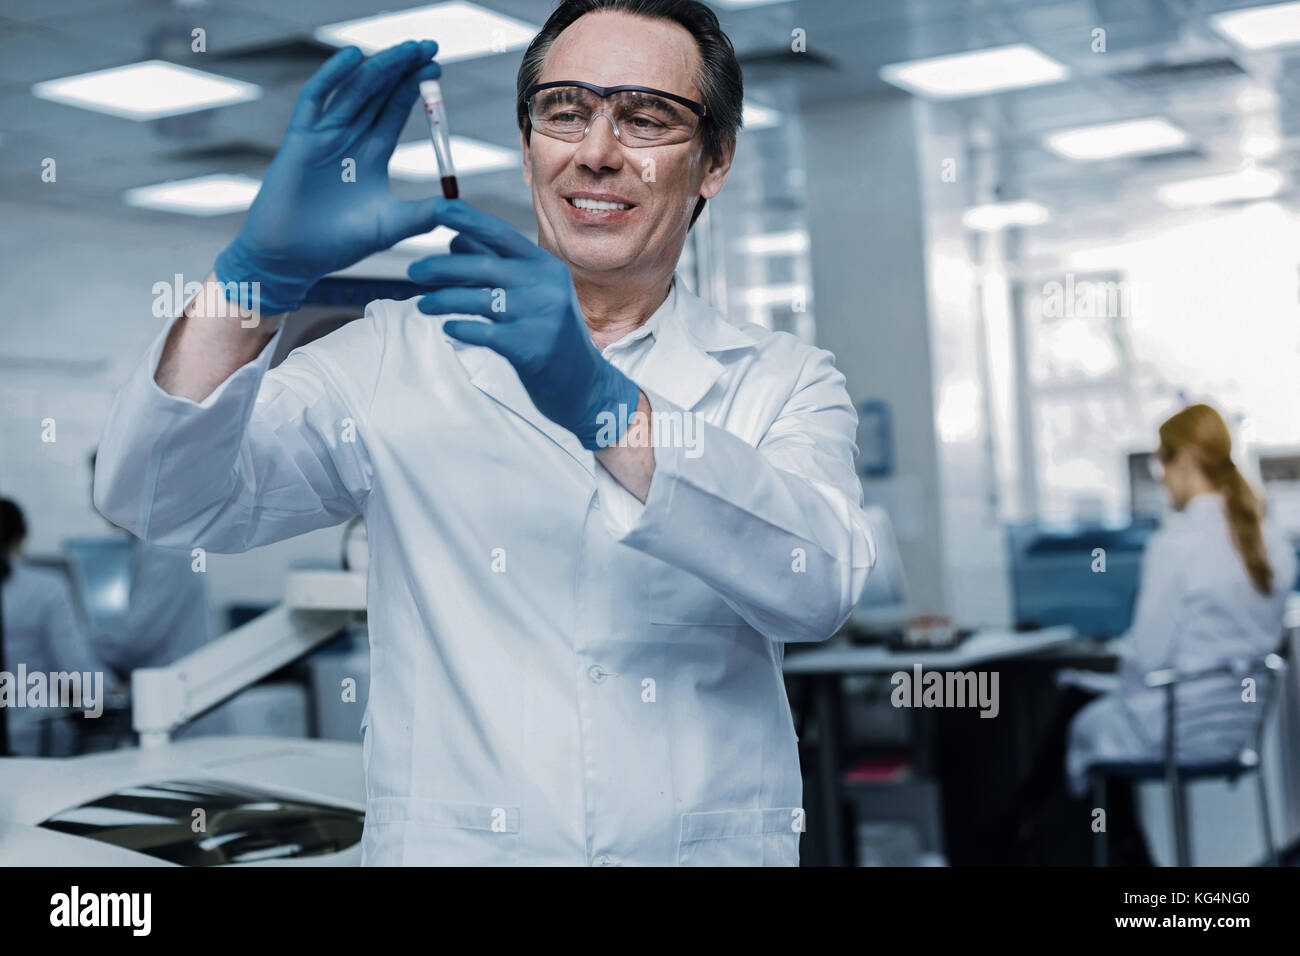 Smart genius scientist looking at the vaccine Stock Photo